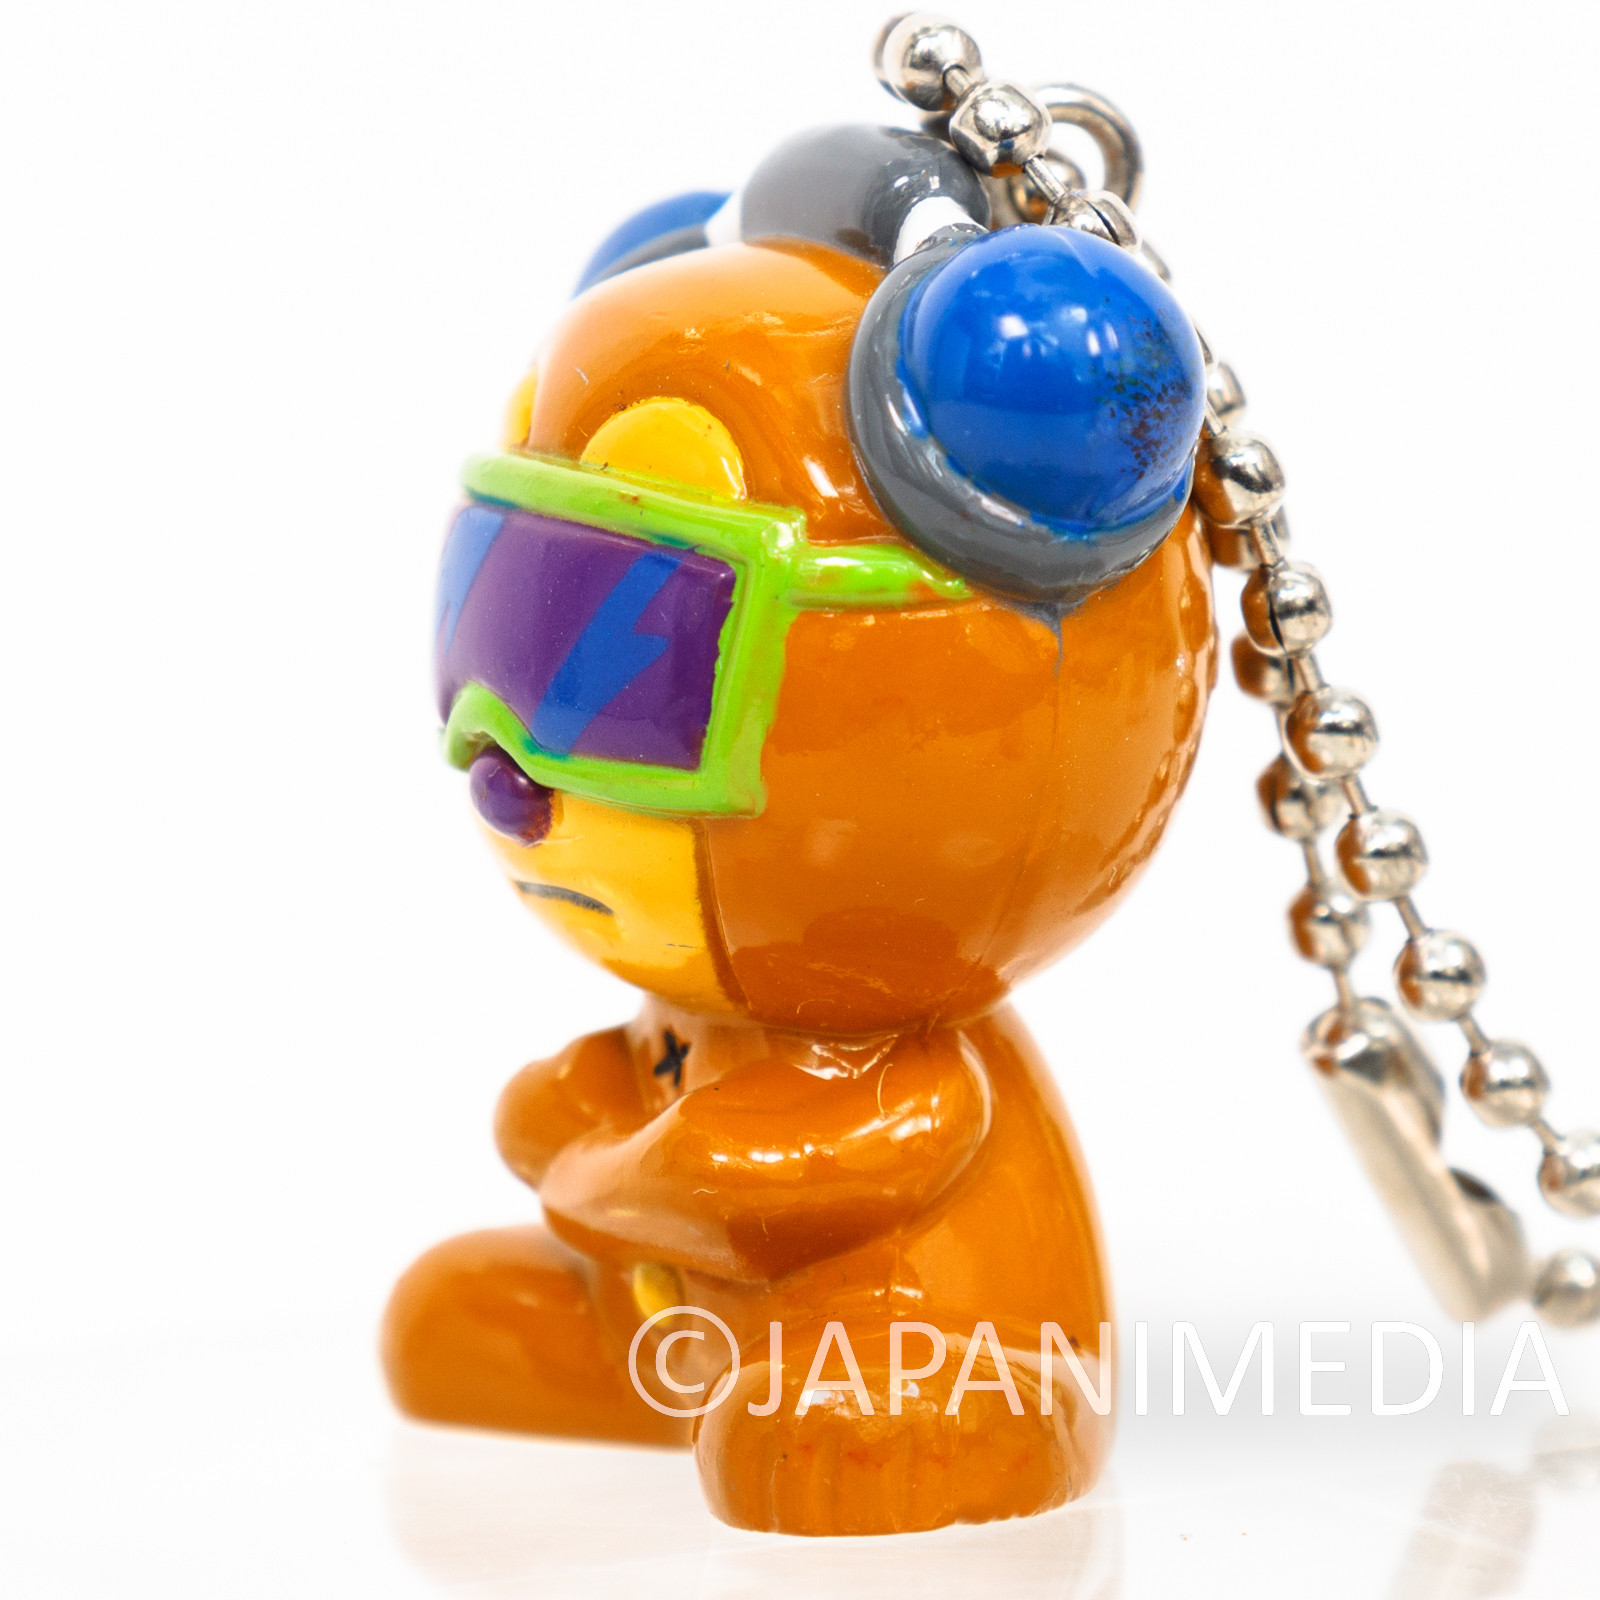 Parappa The Rapper Pj Berri Figure Ball Keychain JAPAN GAME 1